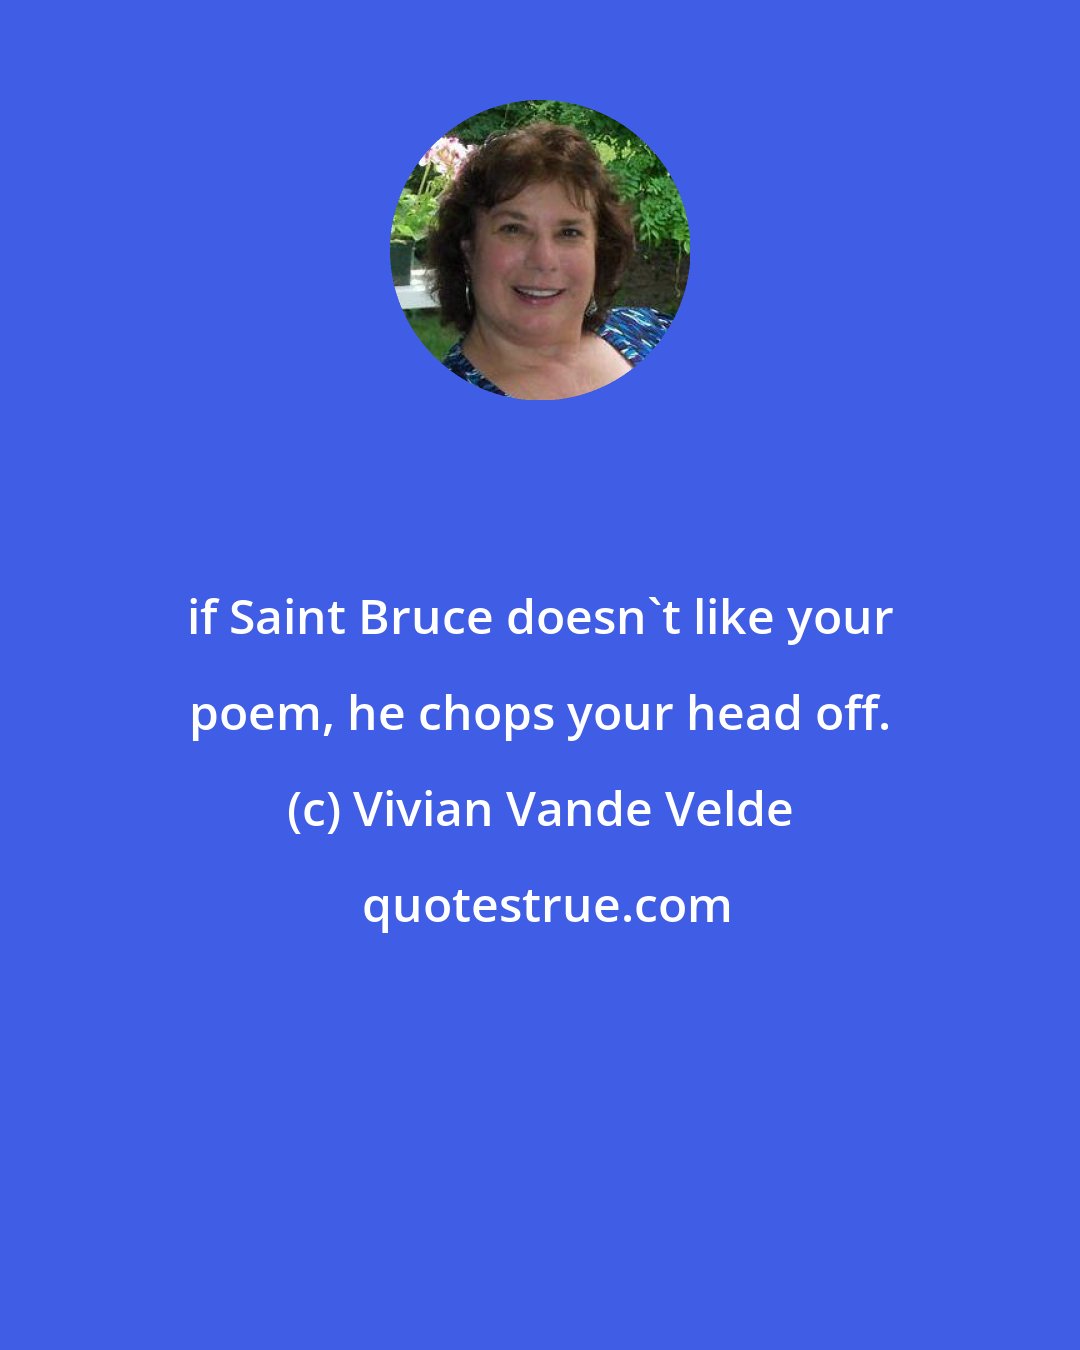 Vivian Vande Velde: if Saint Bruce doesn't like your poem, he chops your head off.